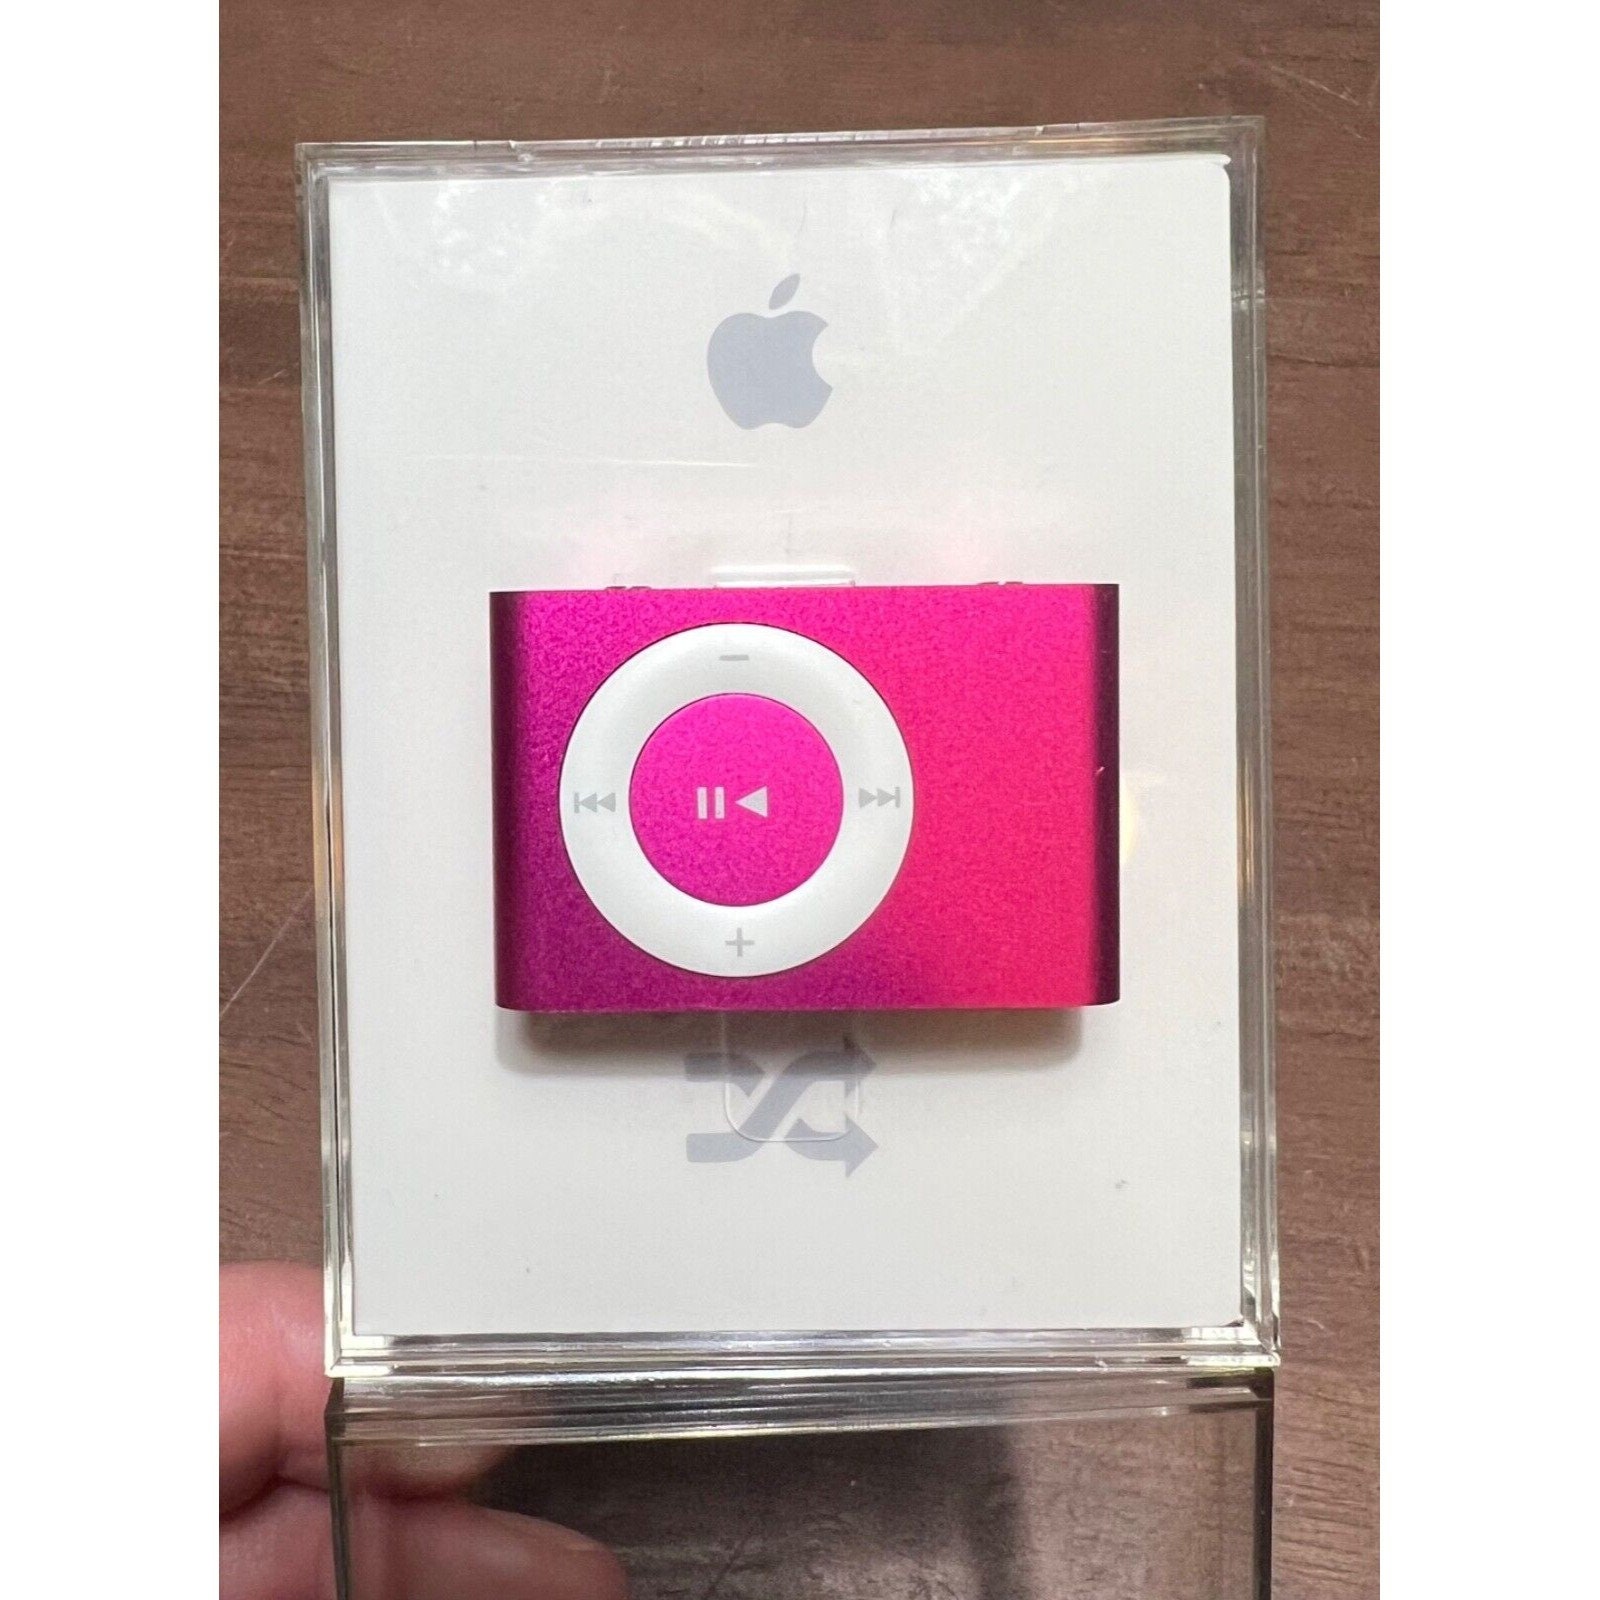 Apple Ipod Shuffle 2nd Generation Pink 1GB A1204 PB811LL/A MP3 new 